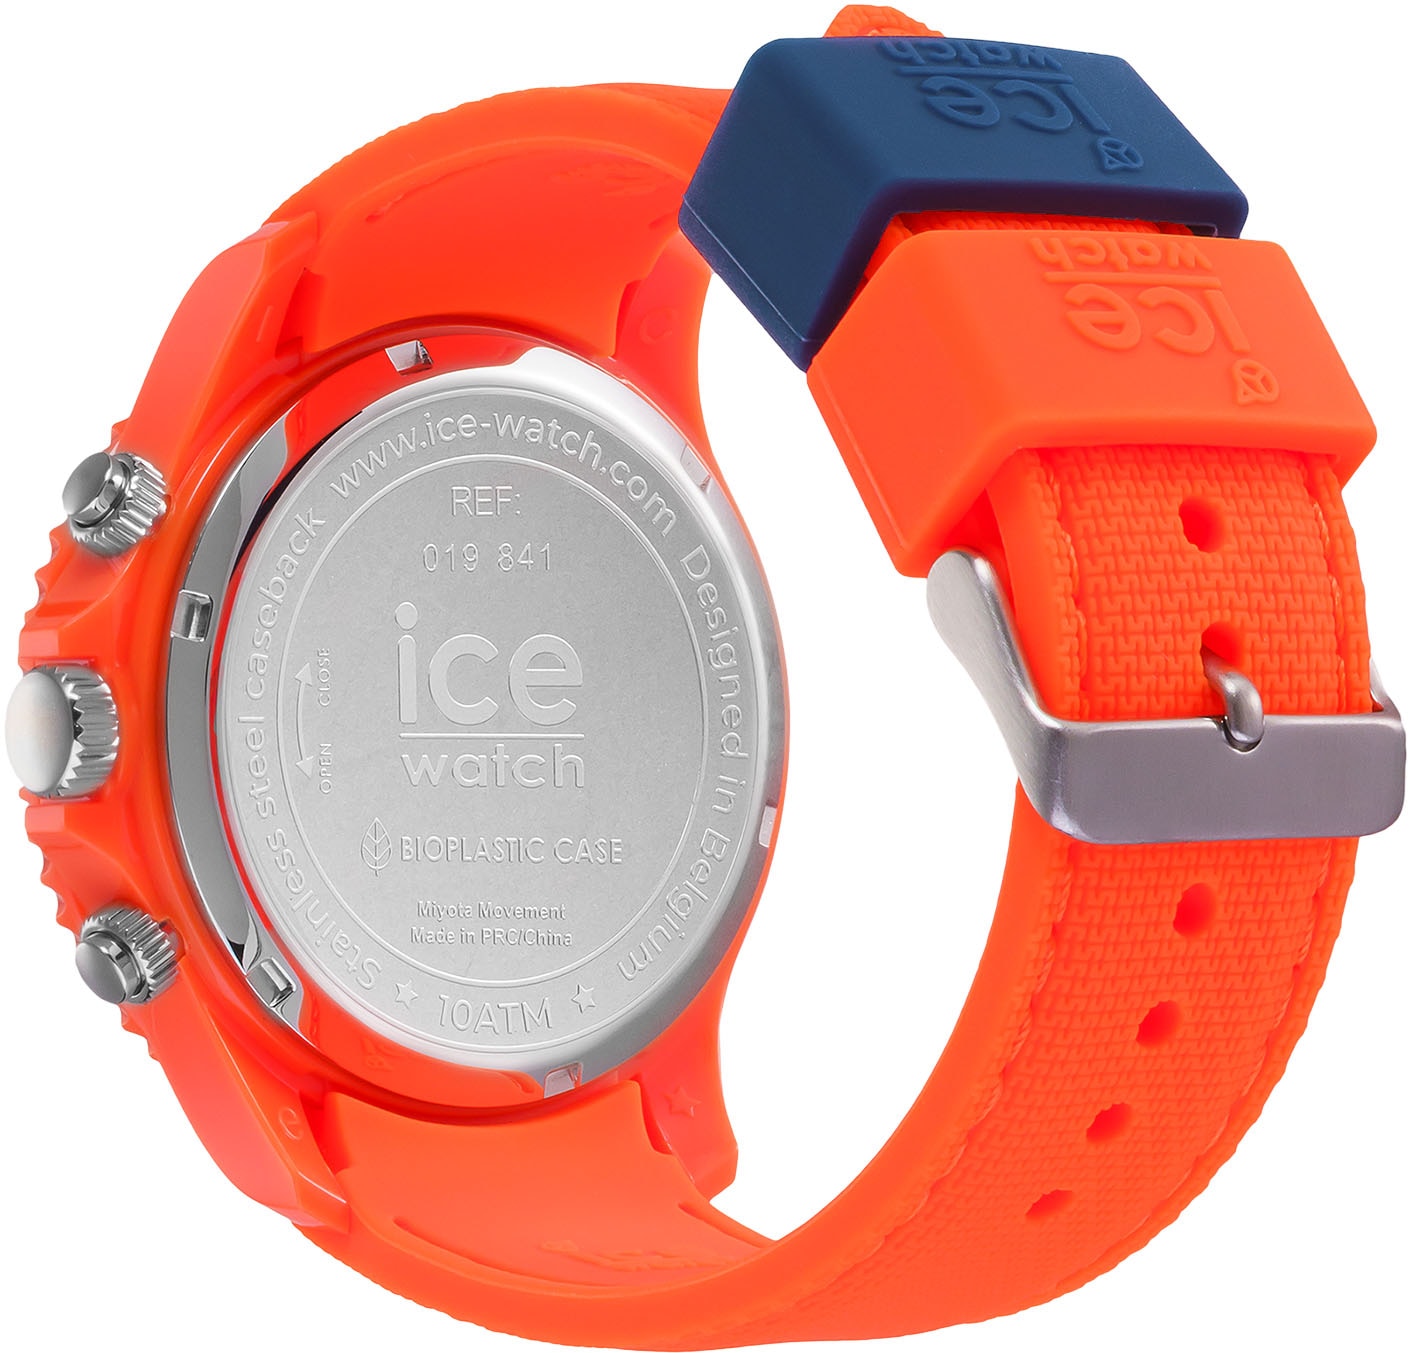 ice-watch Chronograph »ICE chrono - Orange blue - Large - CH, 019841« bei ♕